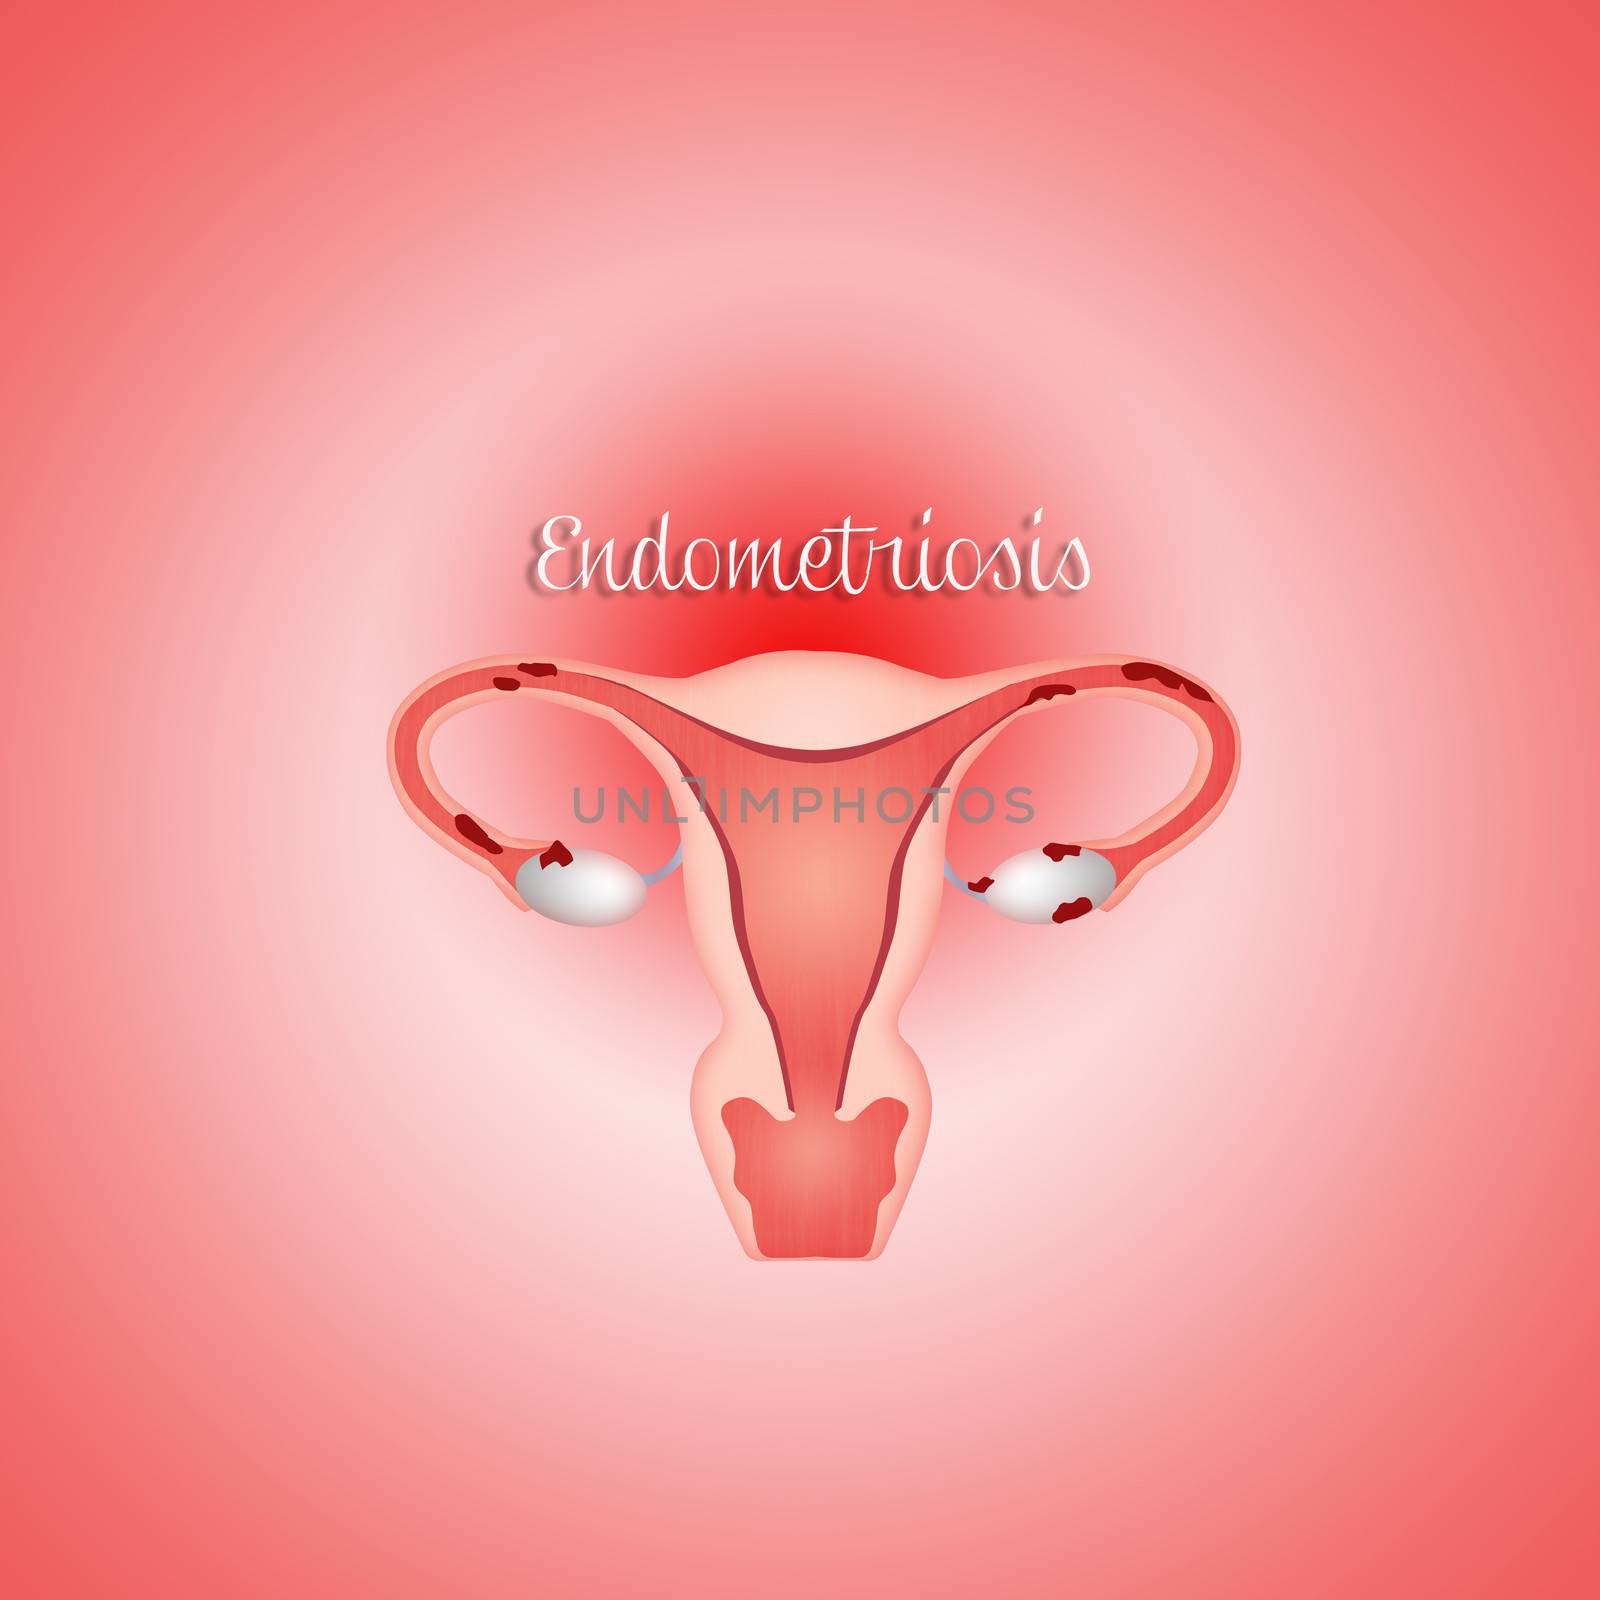 uterus with endometriosis by sognolucido